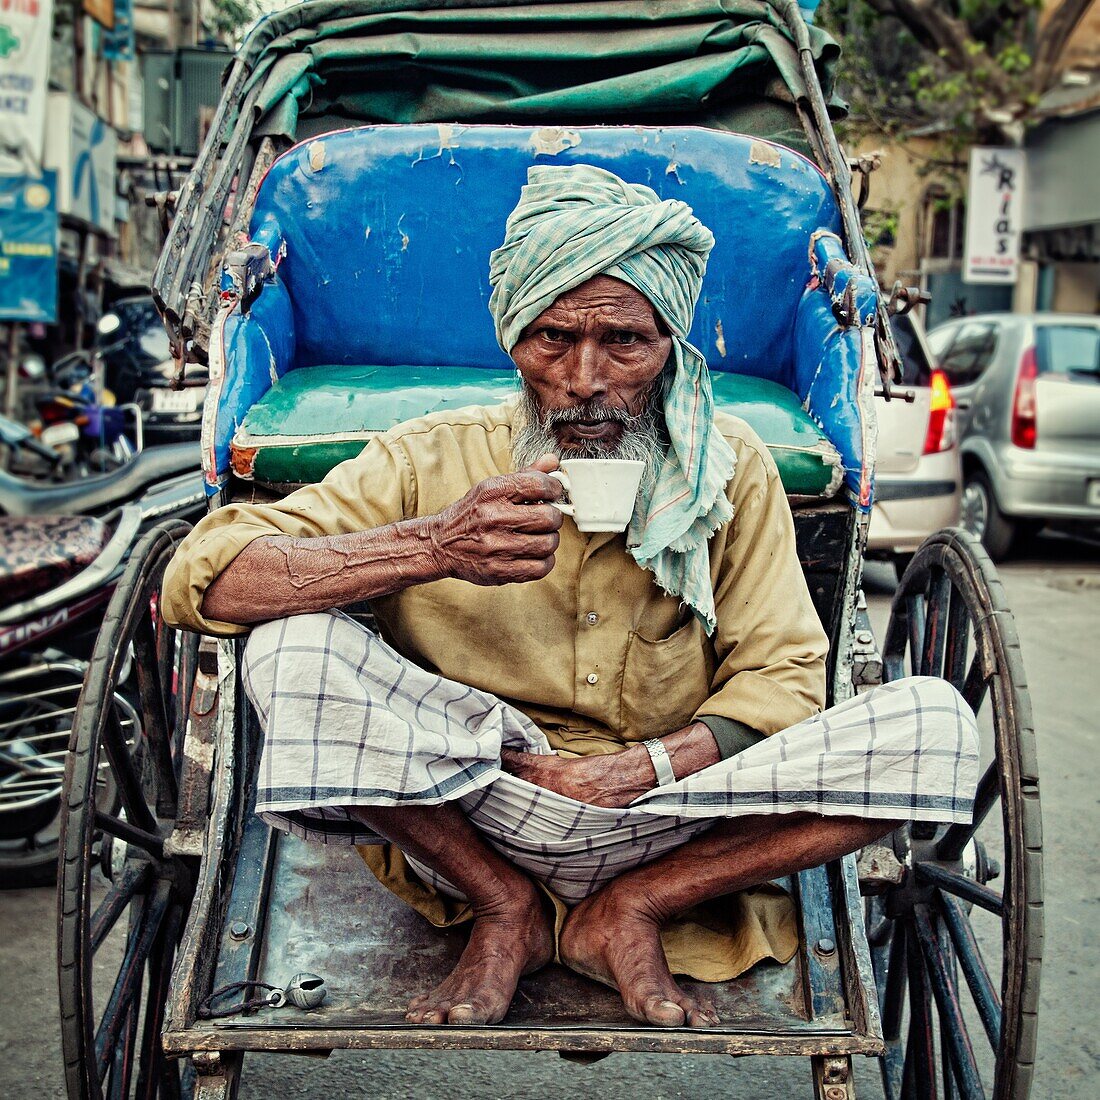 Rickshaw wallah taking a cup of indian tea on his rickshaw  Calcutta, India